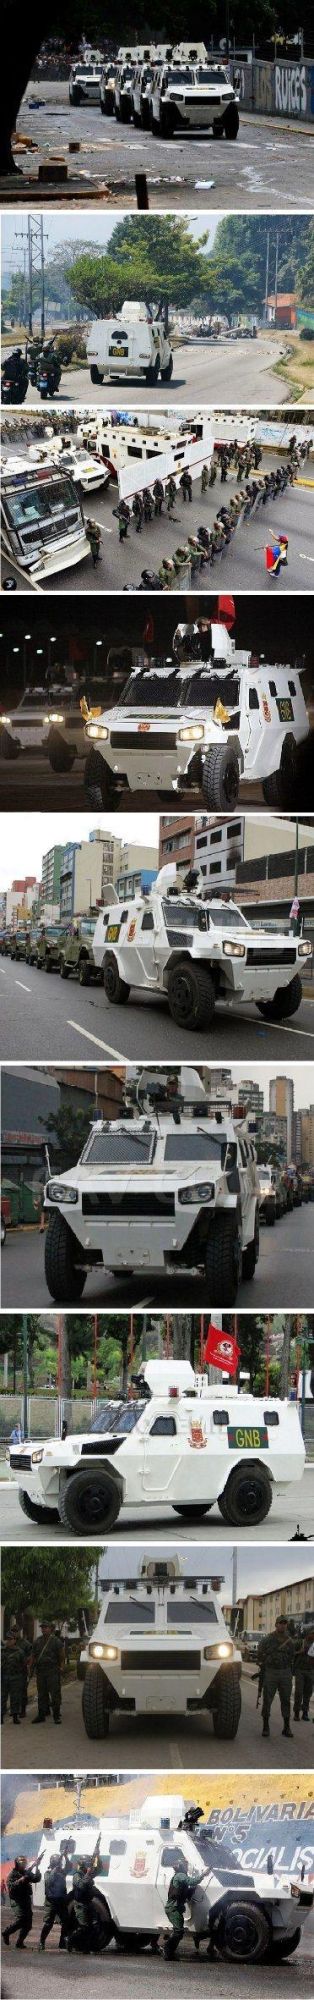 China Military Technology 4X4 Wheeled Light Armoured Vehicle